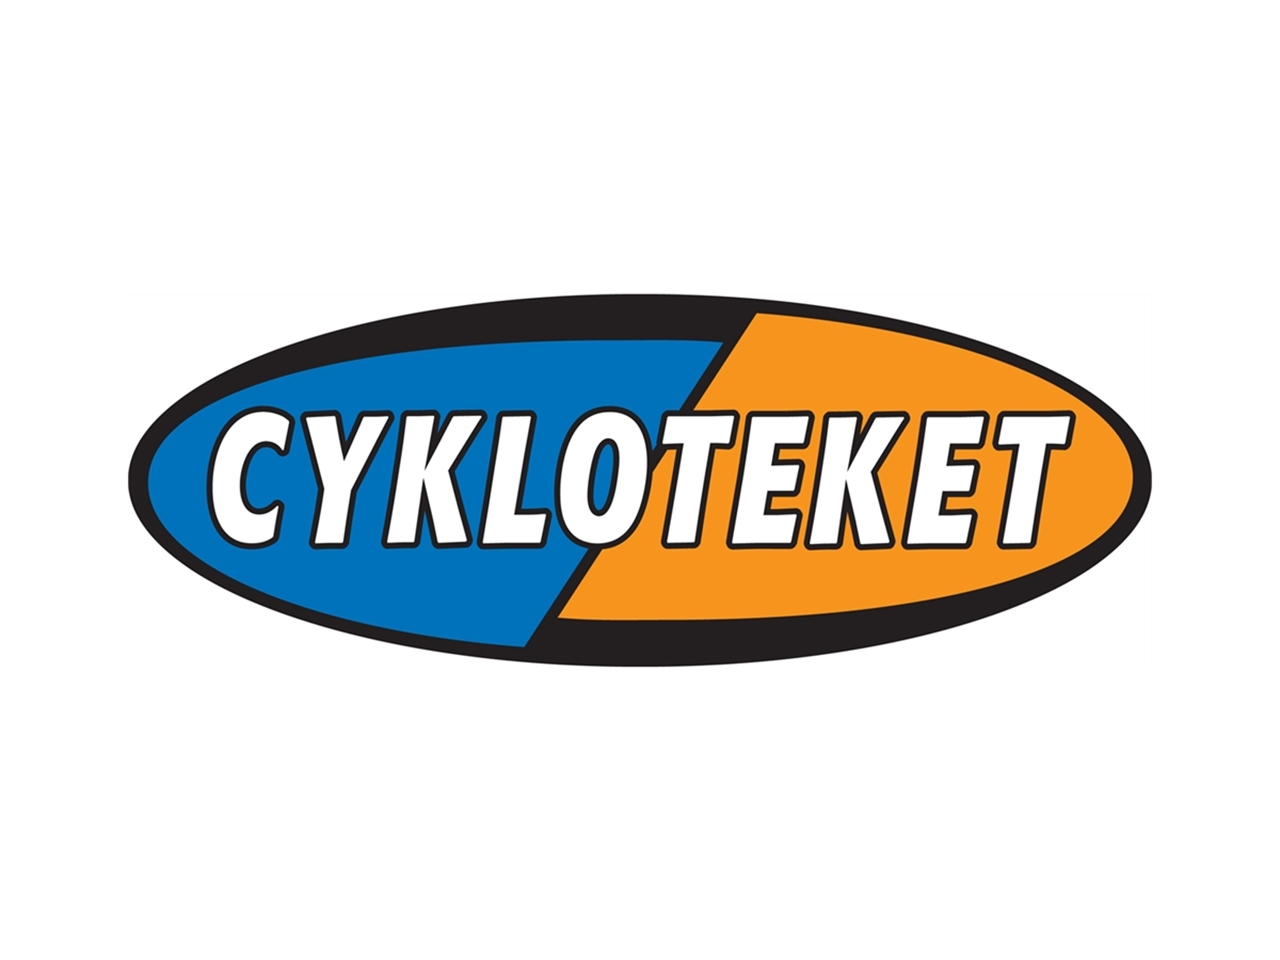 Cykloteket logo